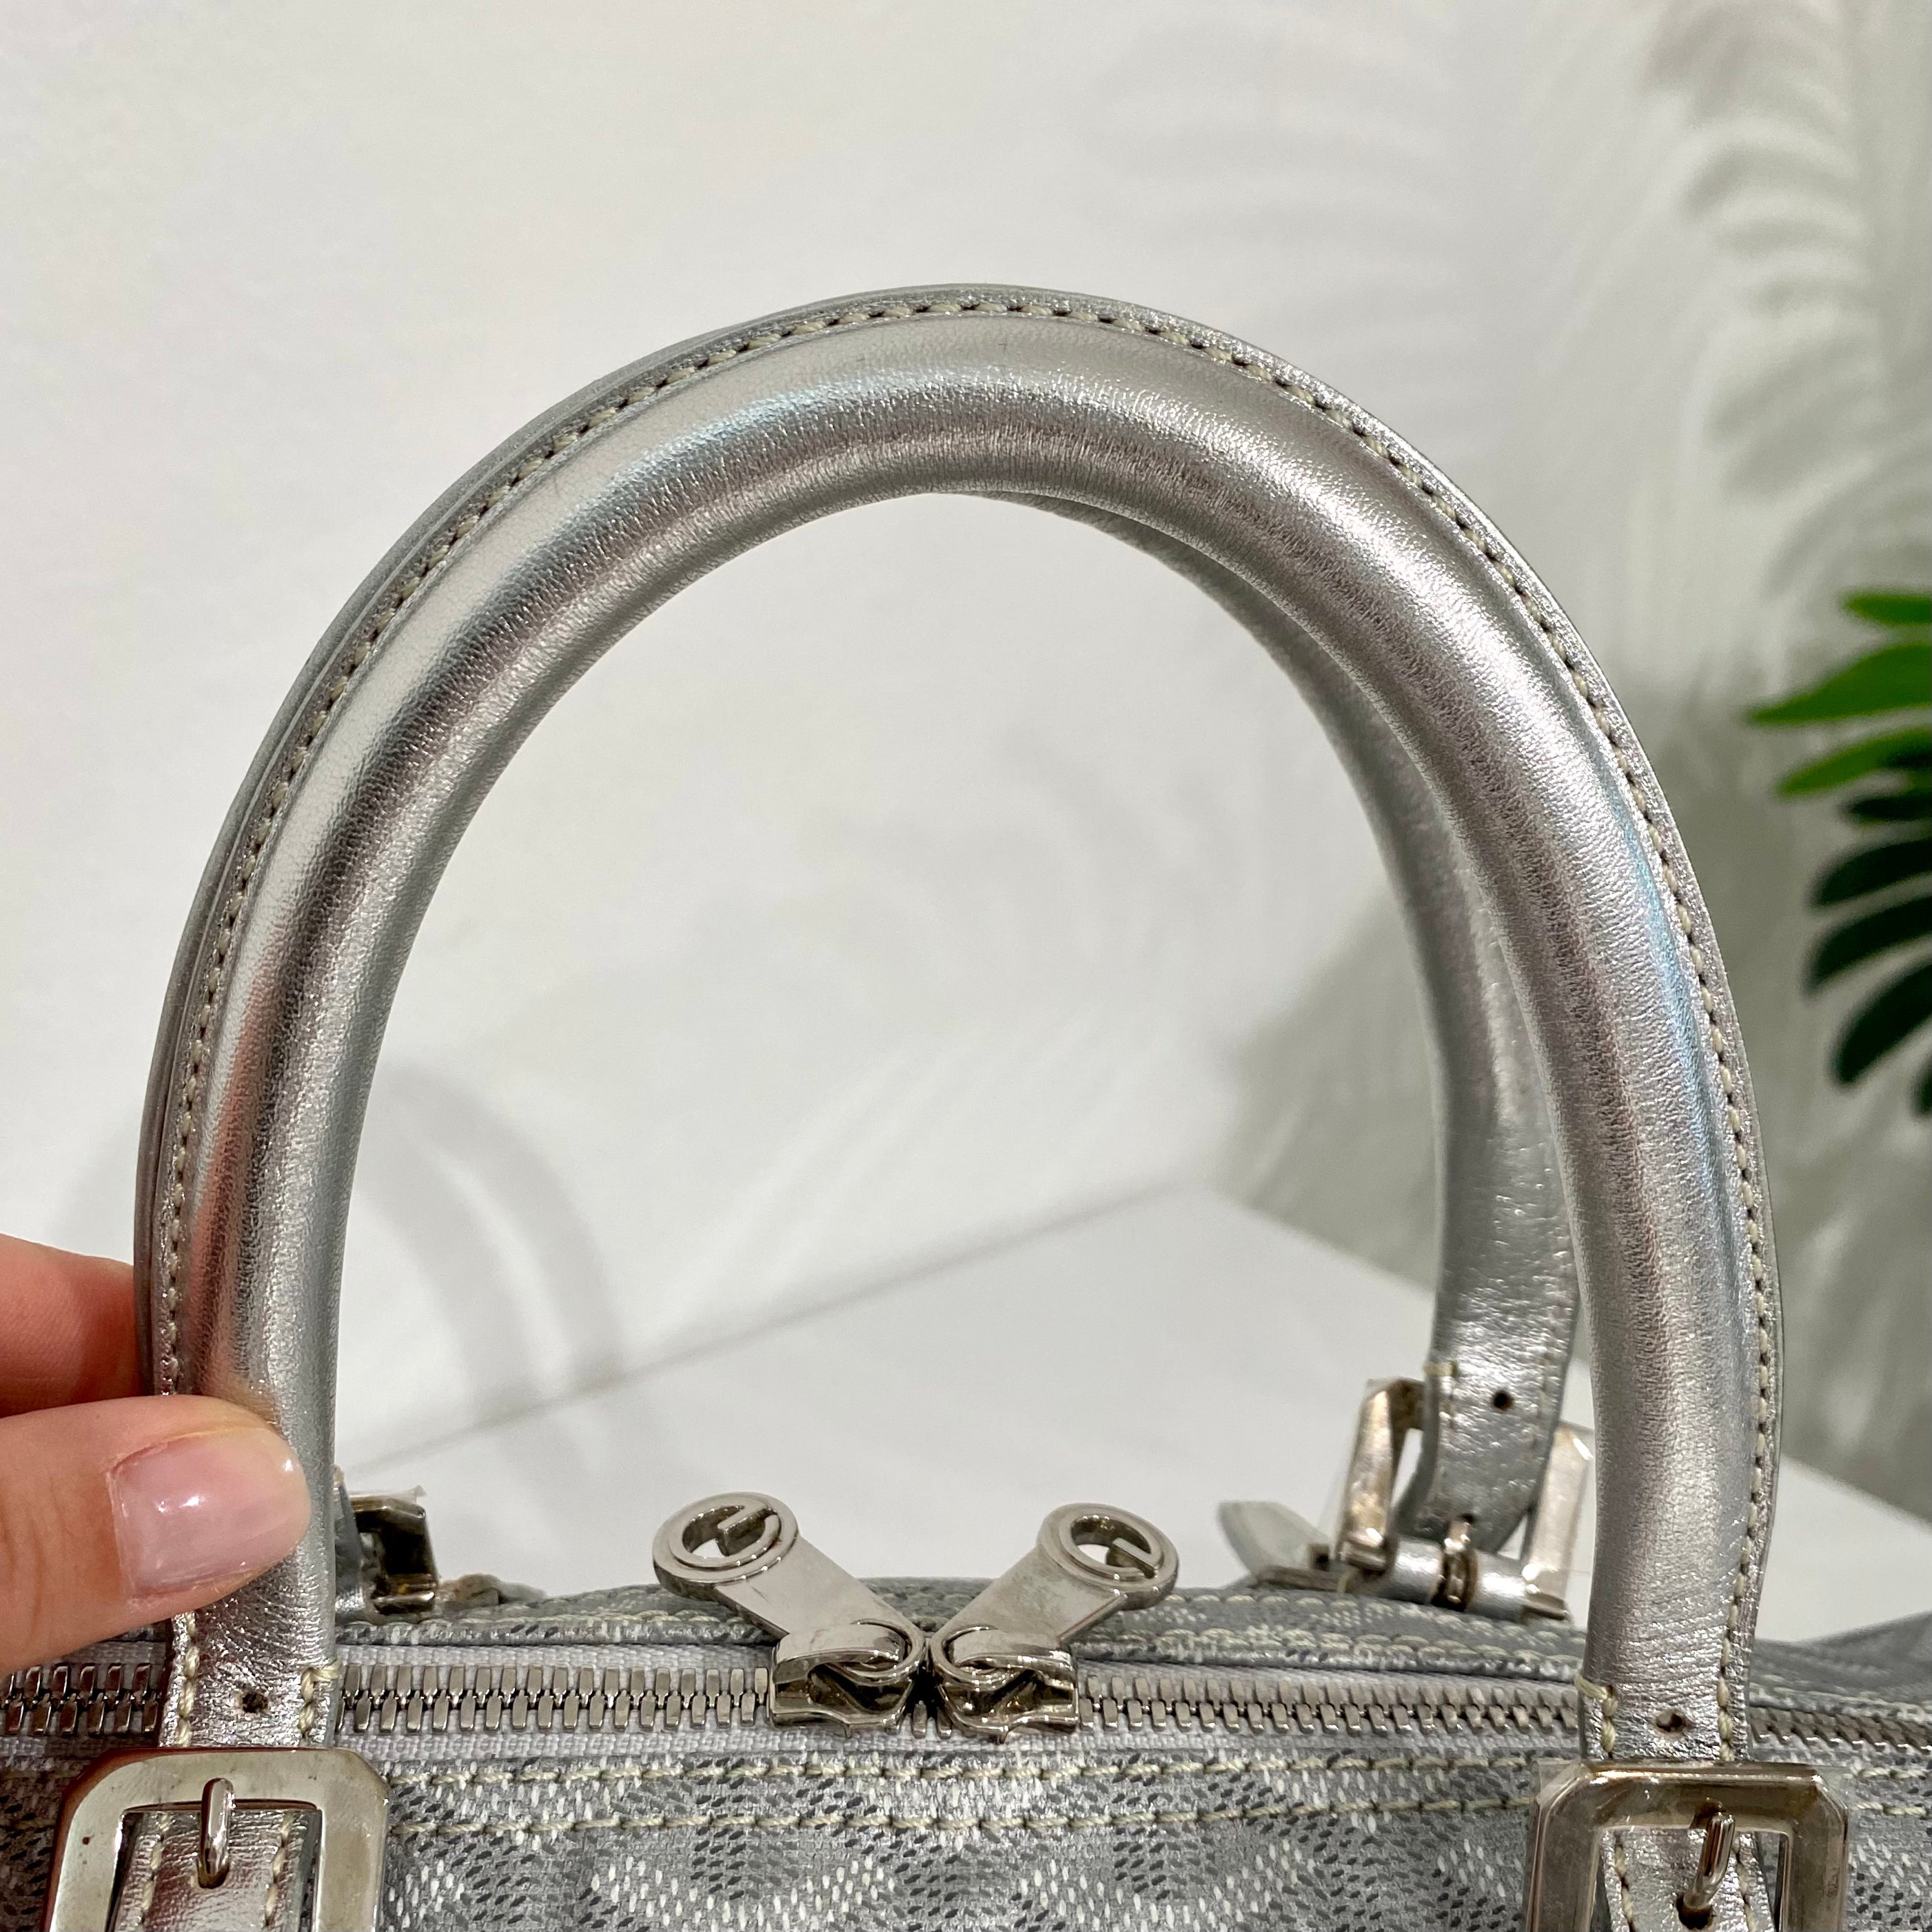 Goyard Metallic Croisiere 35 w/ Tags - Silver Handle Bags, Handbags -  GOY23043